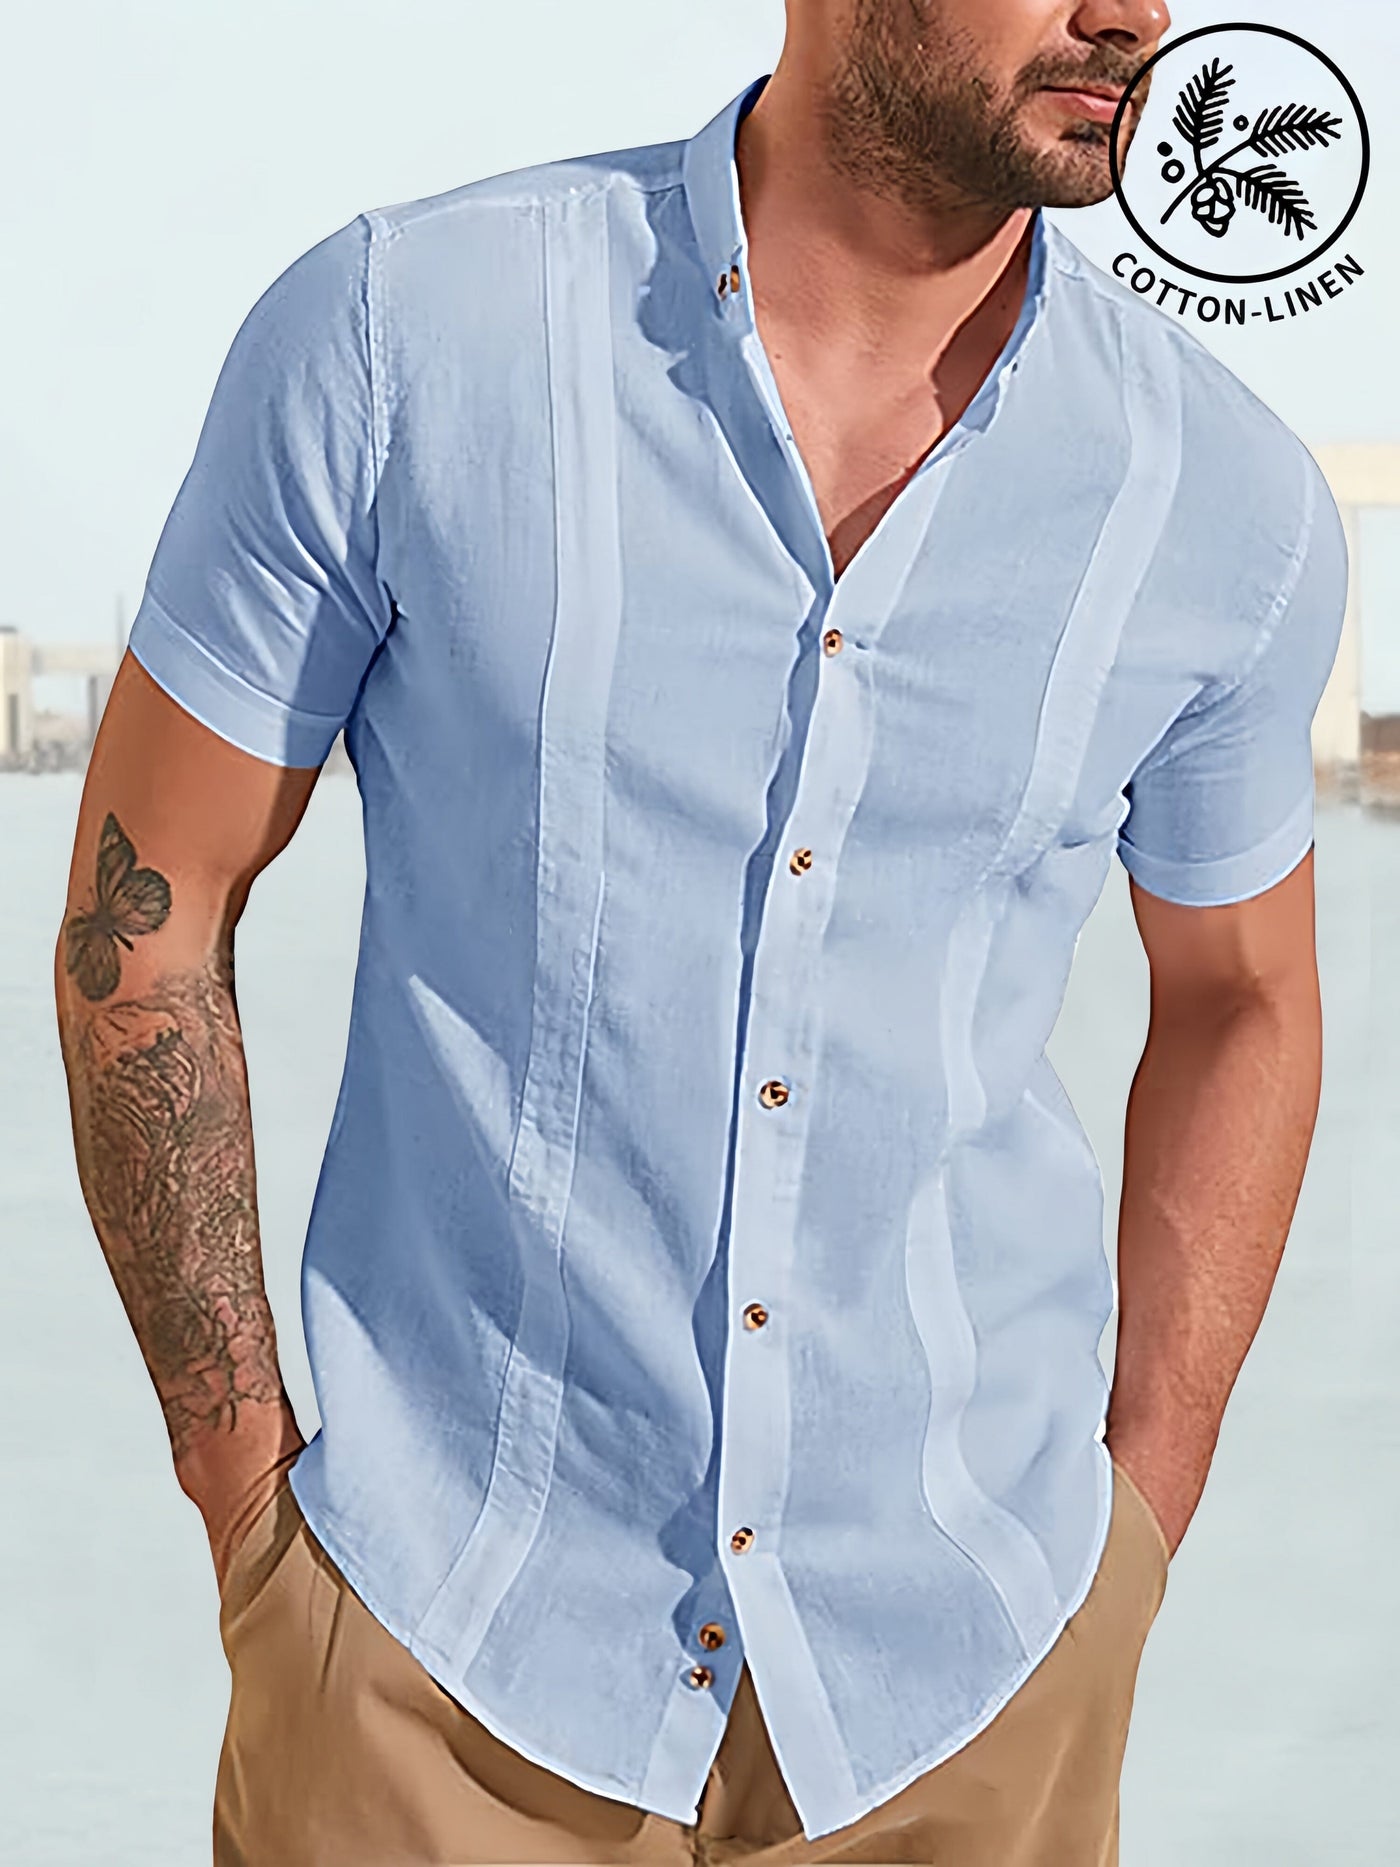 Soft Cotton Linen Loose Fit Button Shirt Shirts coofandystore Clear Blue M 